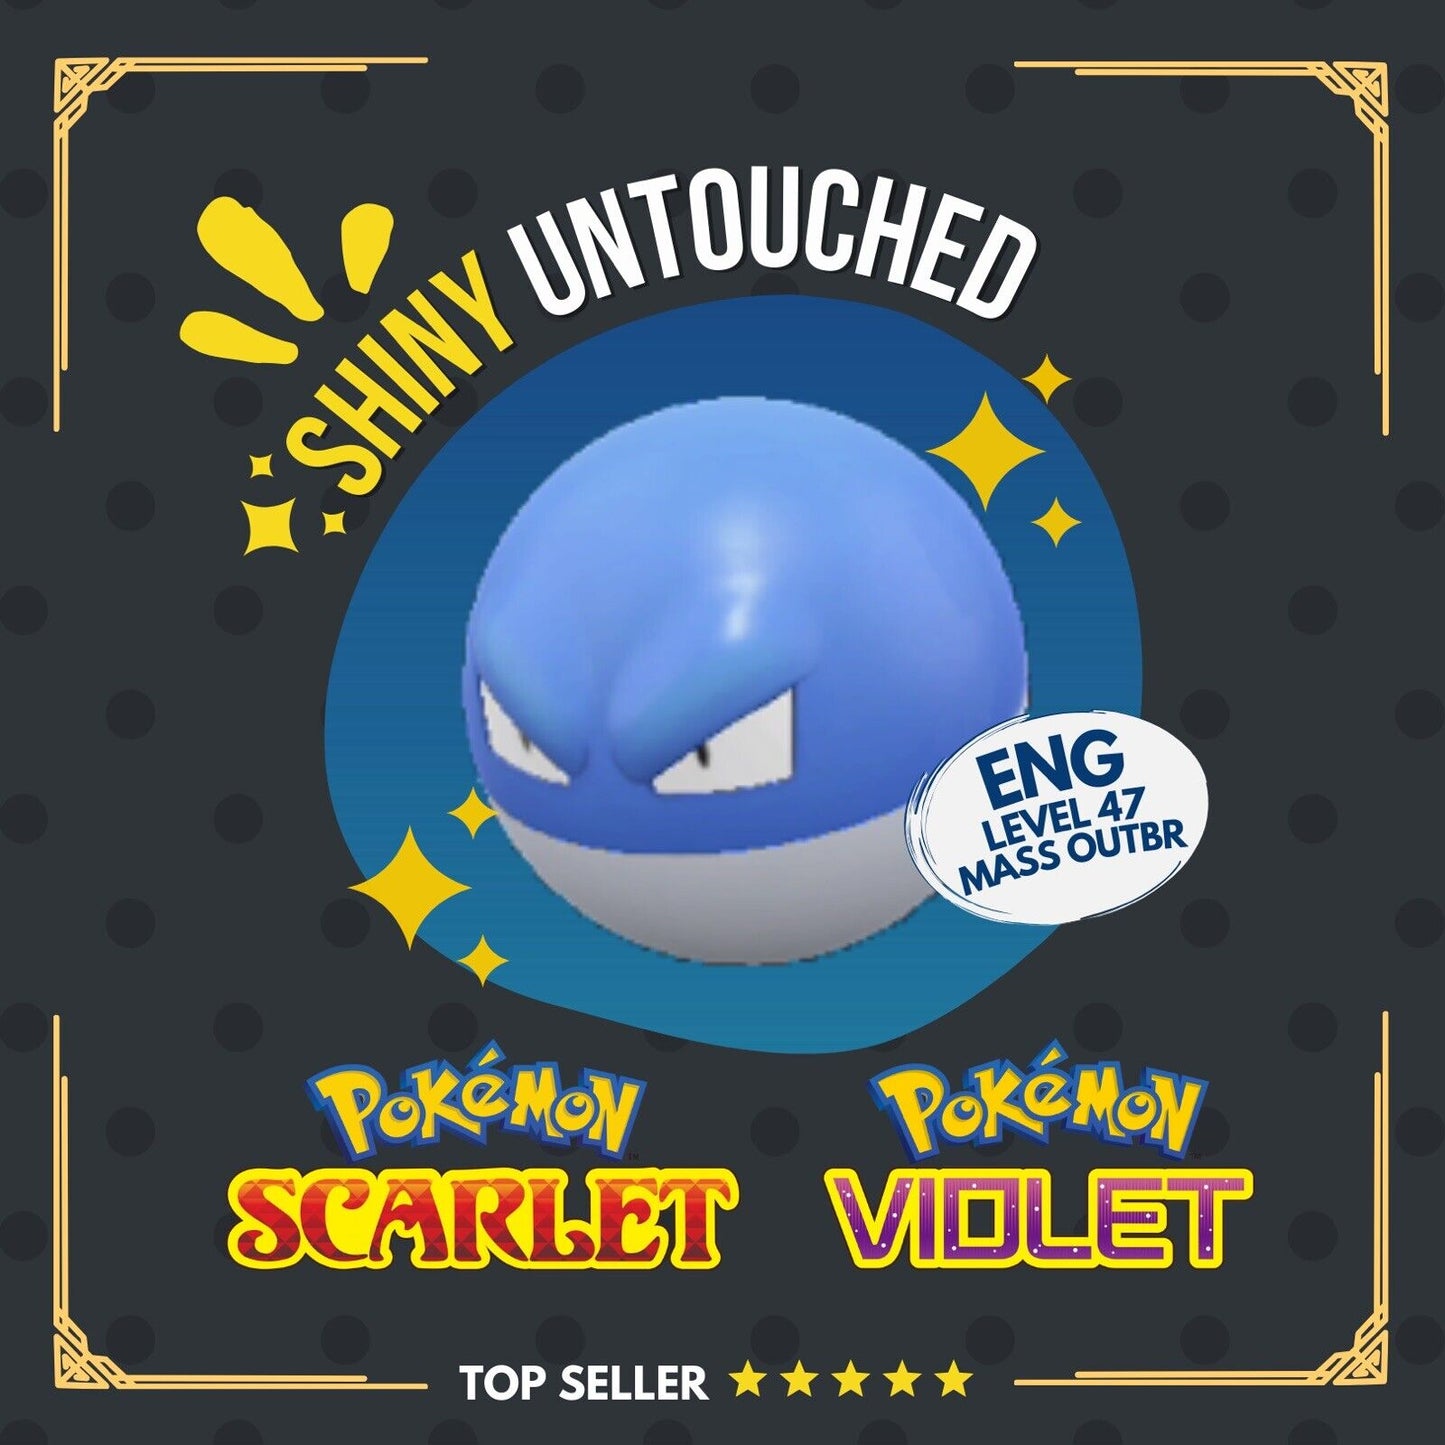 Voltorb Kanto Shiny Event Mass Outbreak Untouched IV Pokémon Scarlet Violet Shiny by Shiny Living Dex | Shiny Living Dex